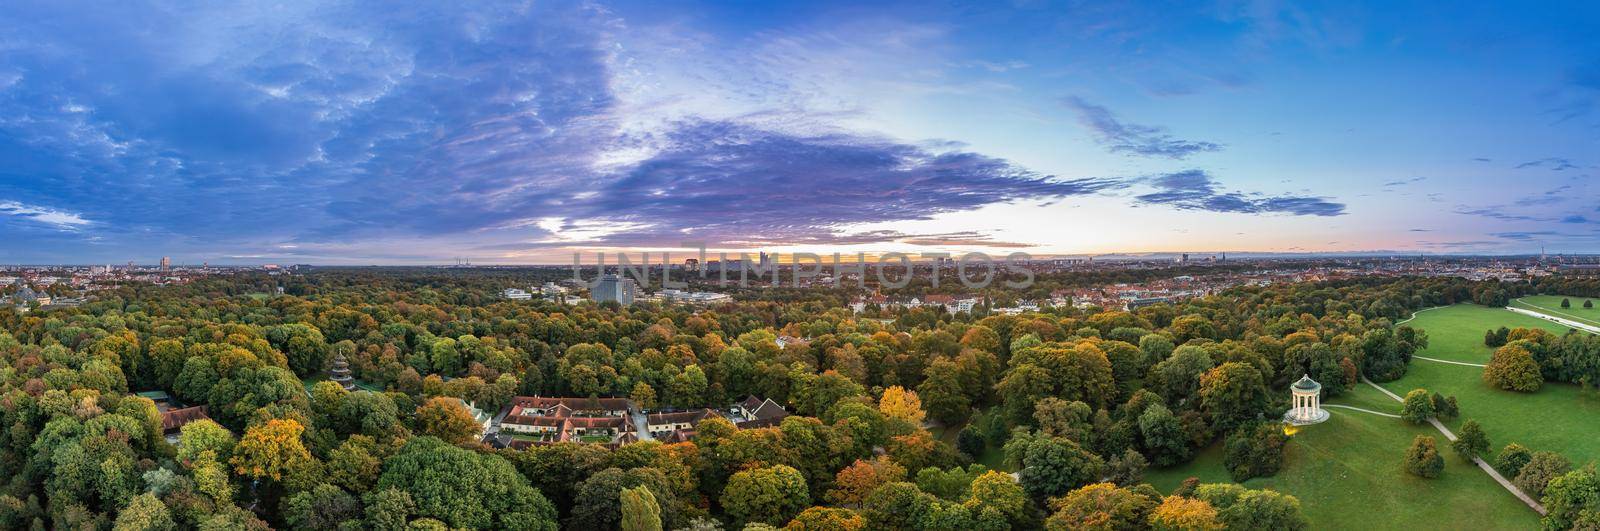 Munich's Englischer Garten in panoramic view as a popular tourism destination. by AllesSuper